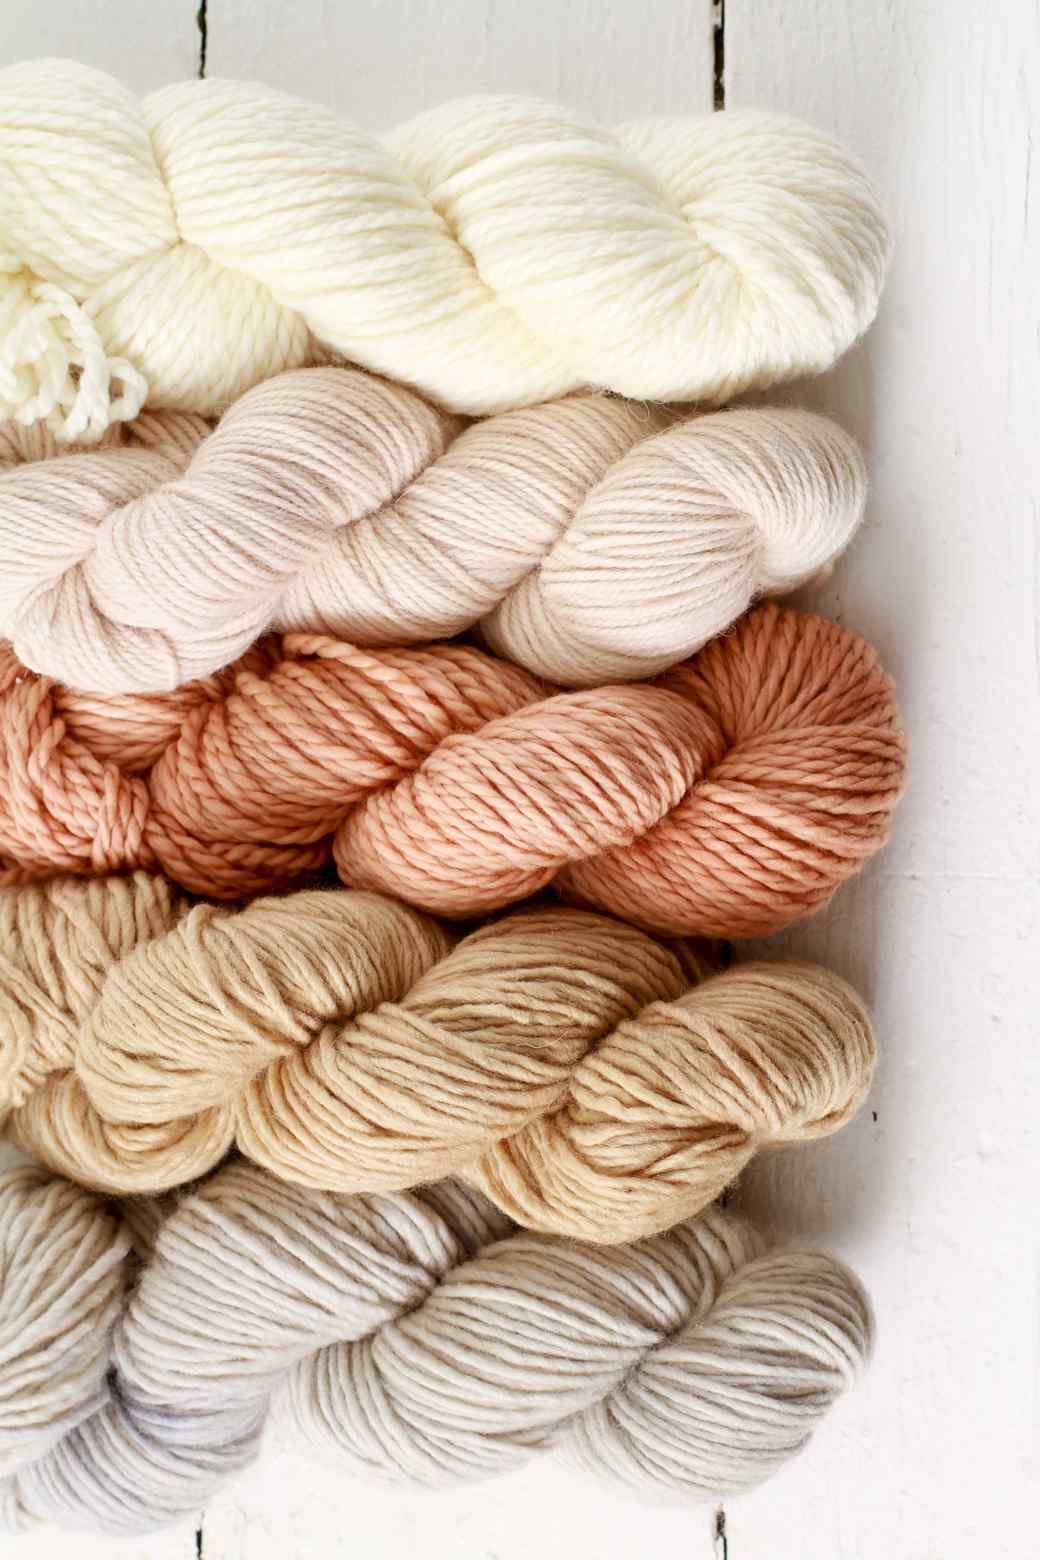 Wool yarn,100% natural, knitting - crochet - craft 